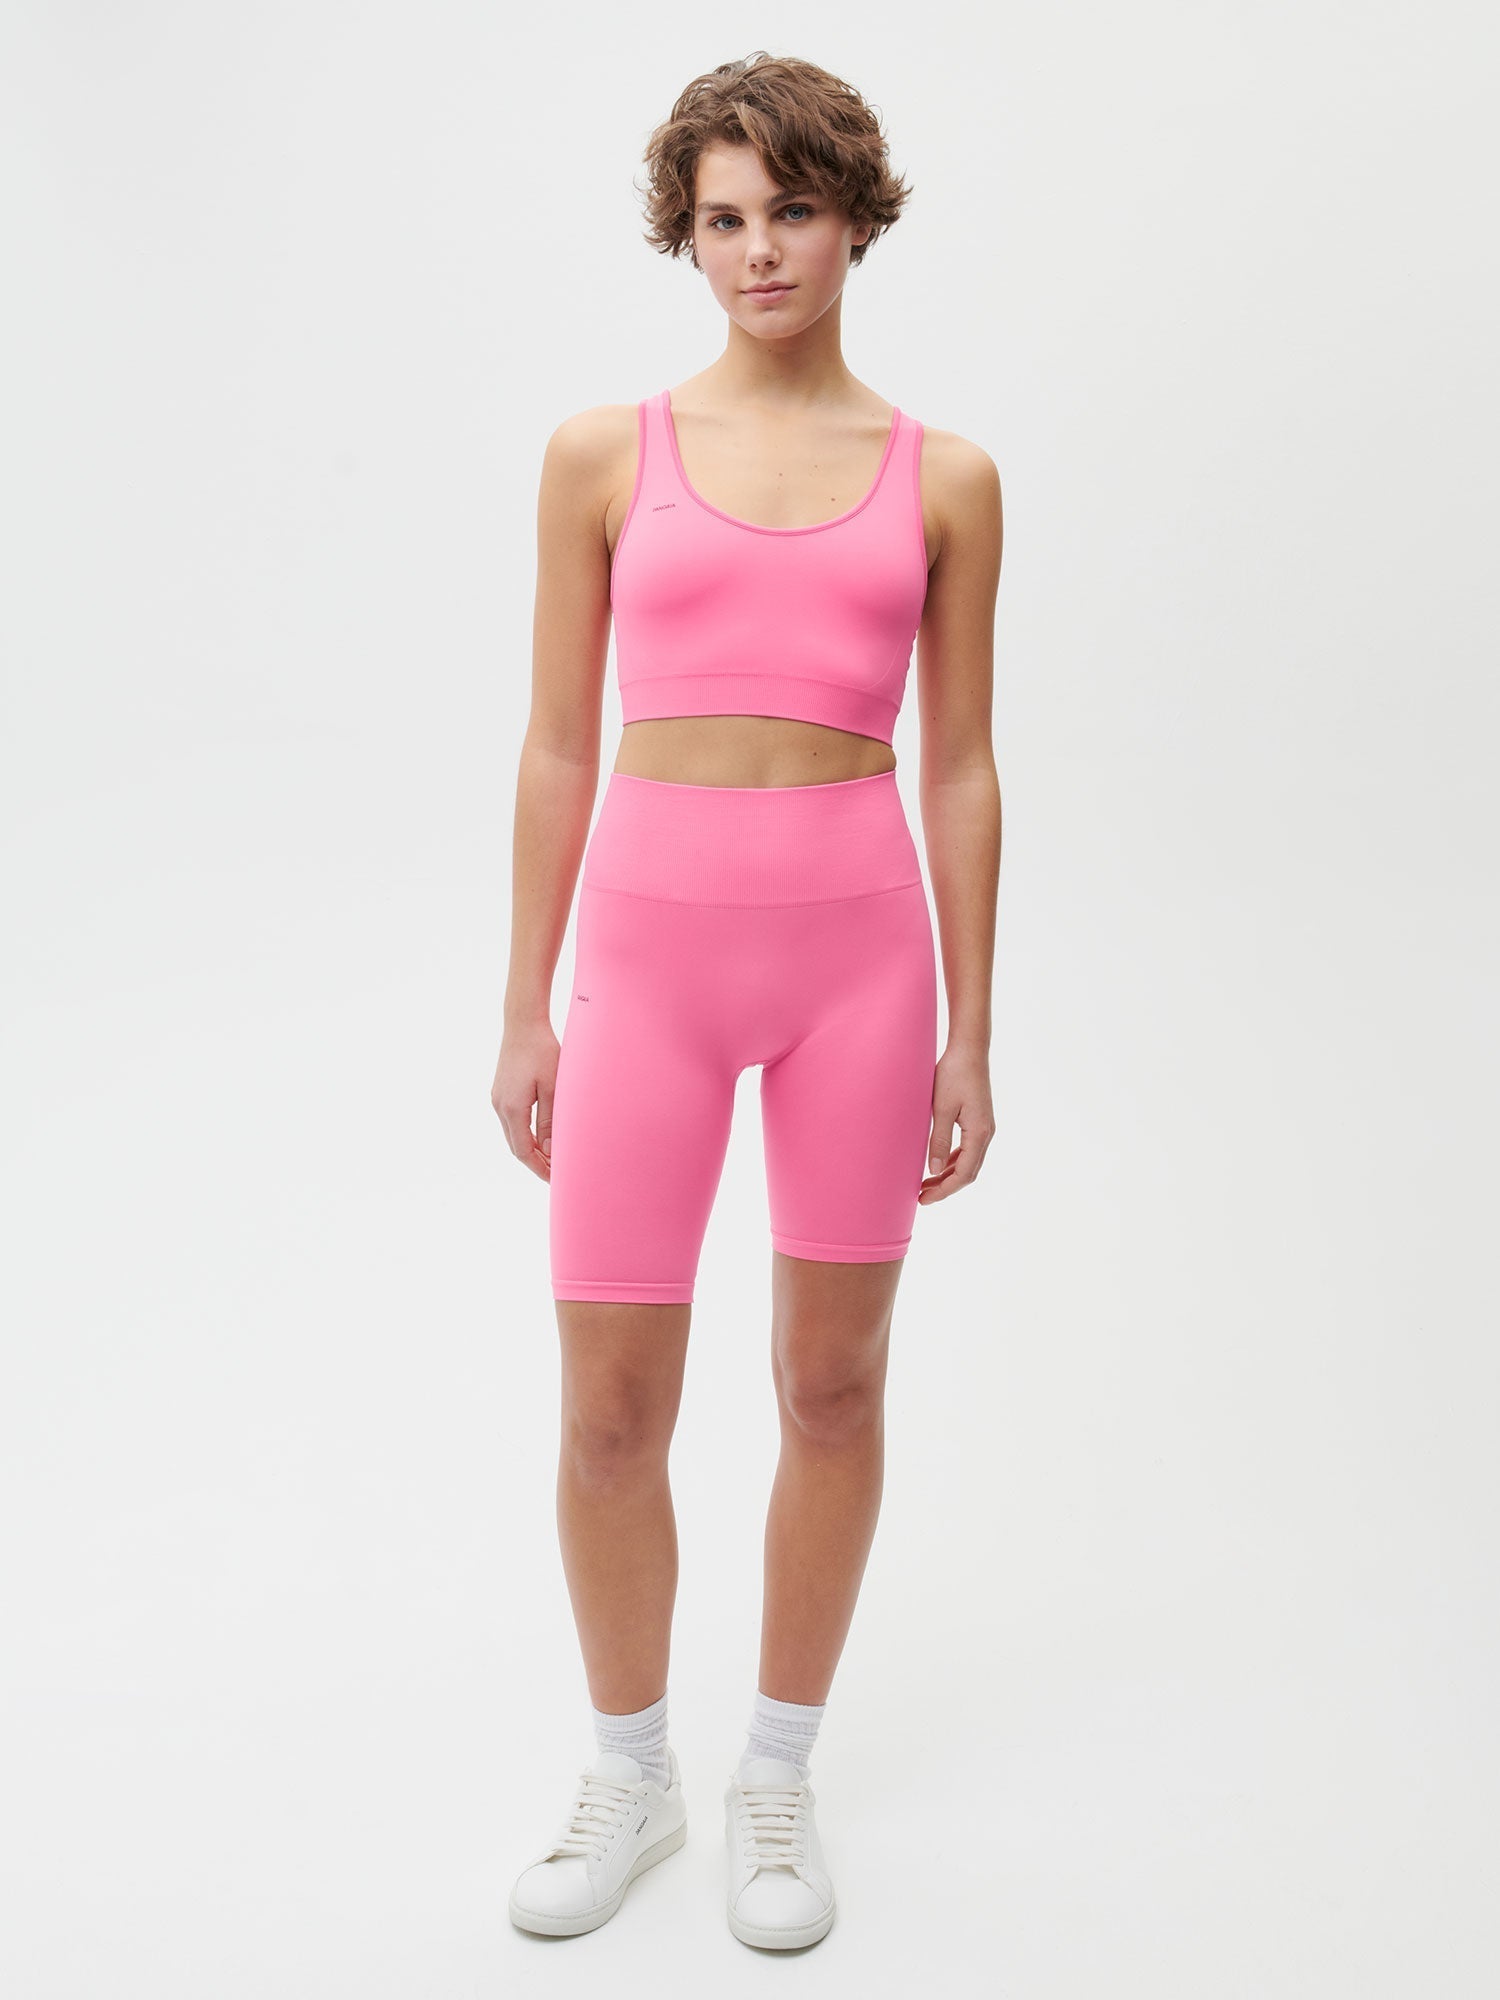 Activewear Womens Shorts Watermelon Pink 